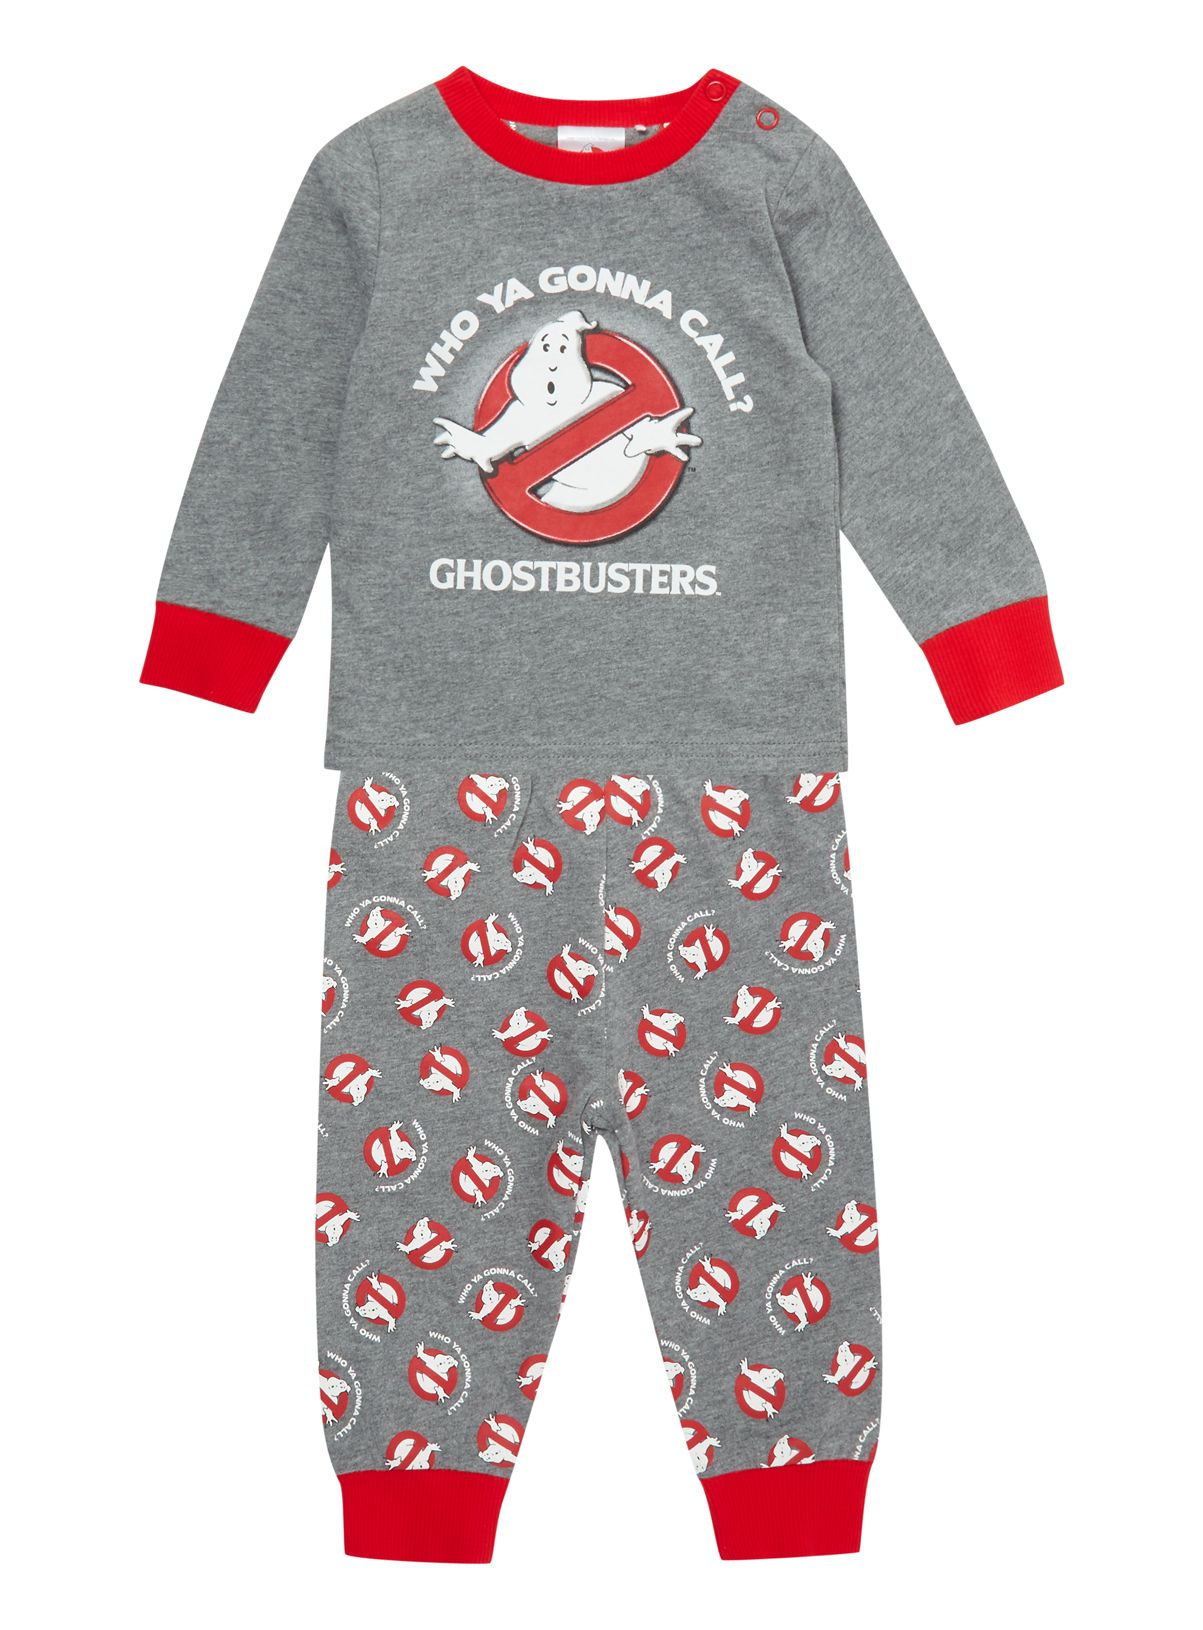 Pyjama ghostbuster